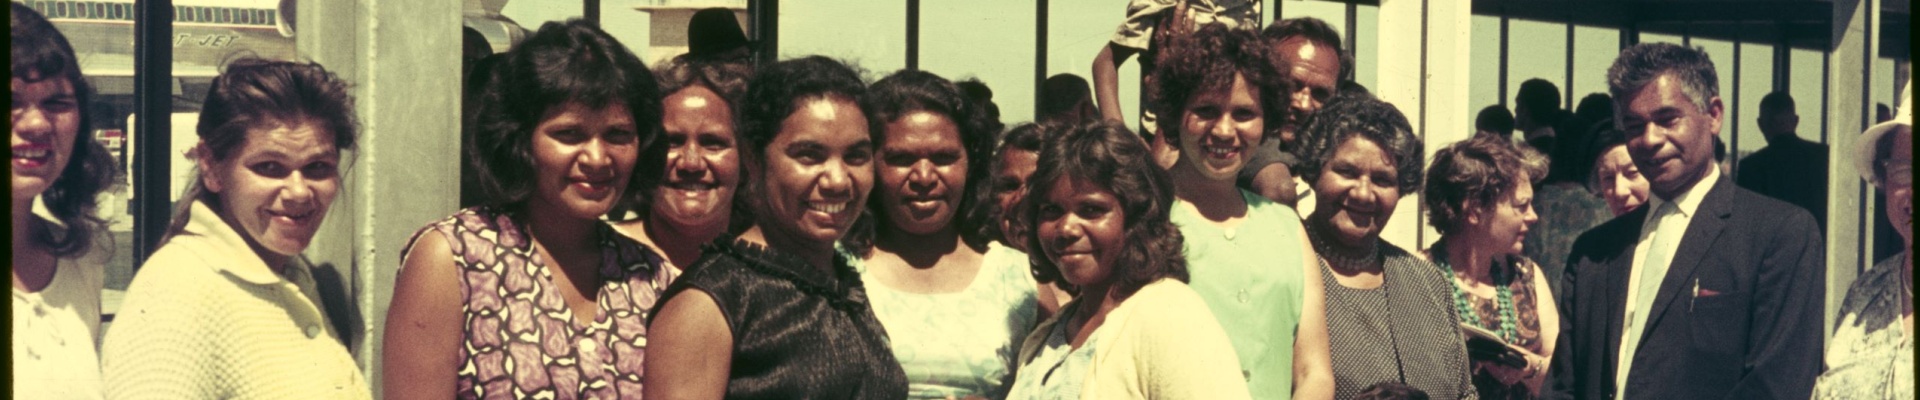  Joyce Mercy arriving at Perth Airport to visit Aboriginal Groups in Perth ca1962